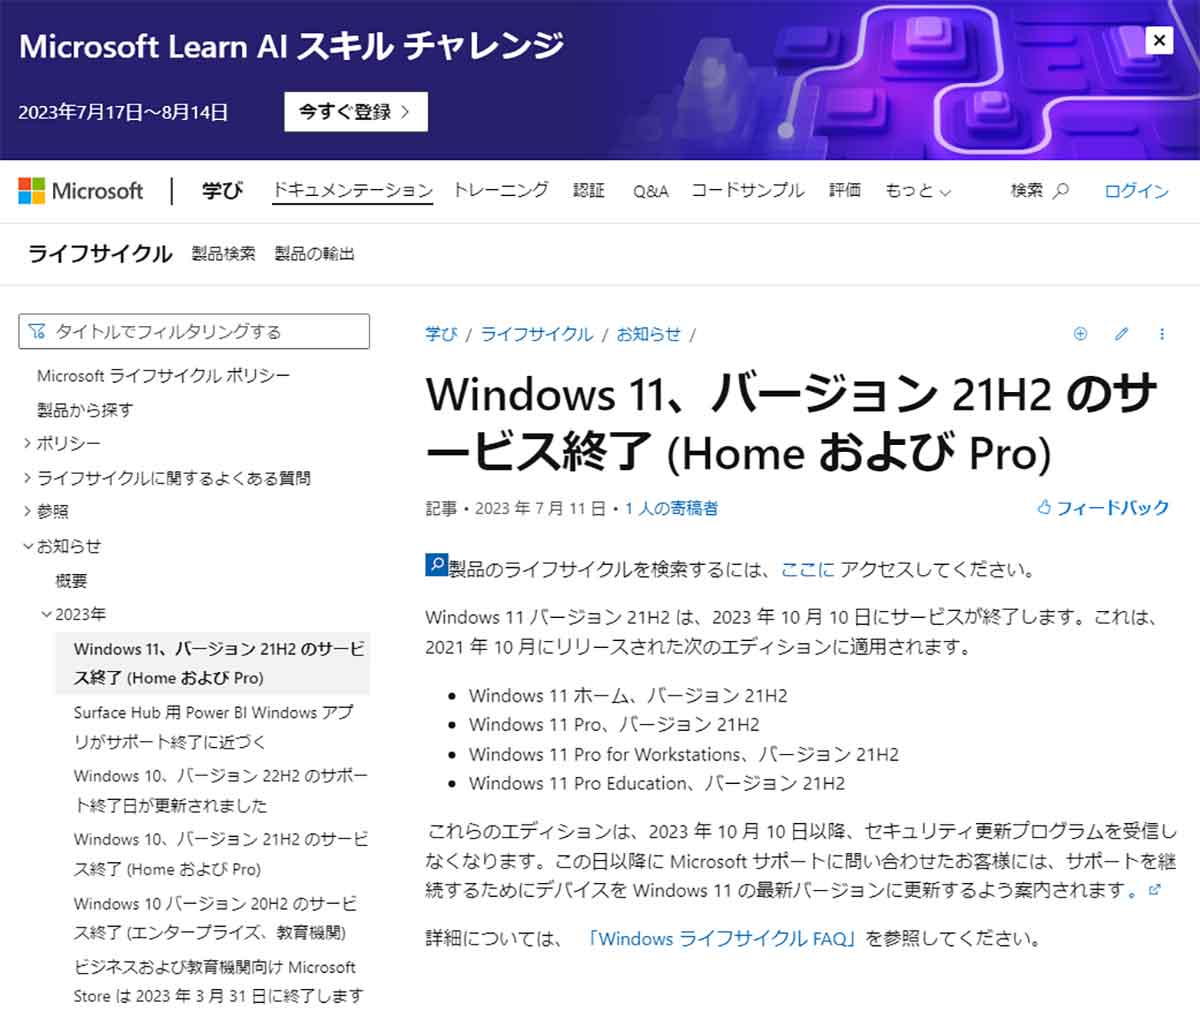 Windows 11の「21H2」は23年10月10日以降、危険な状態に